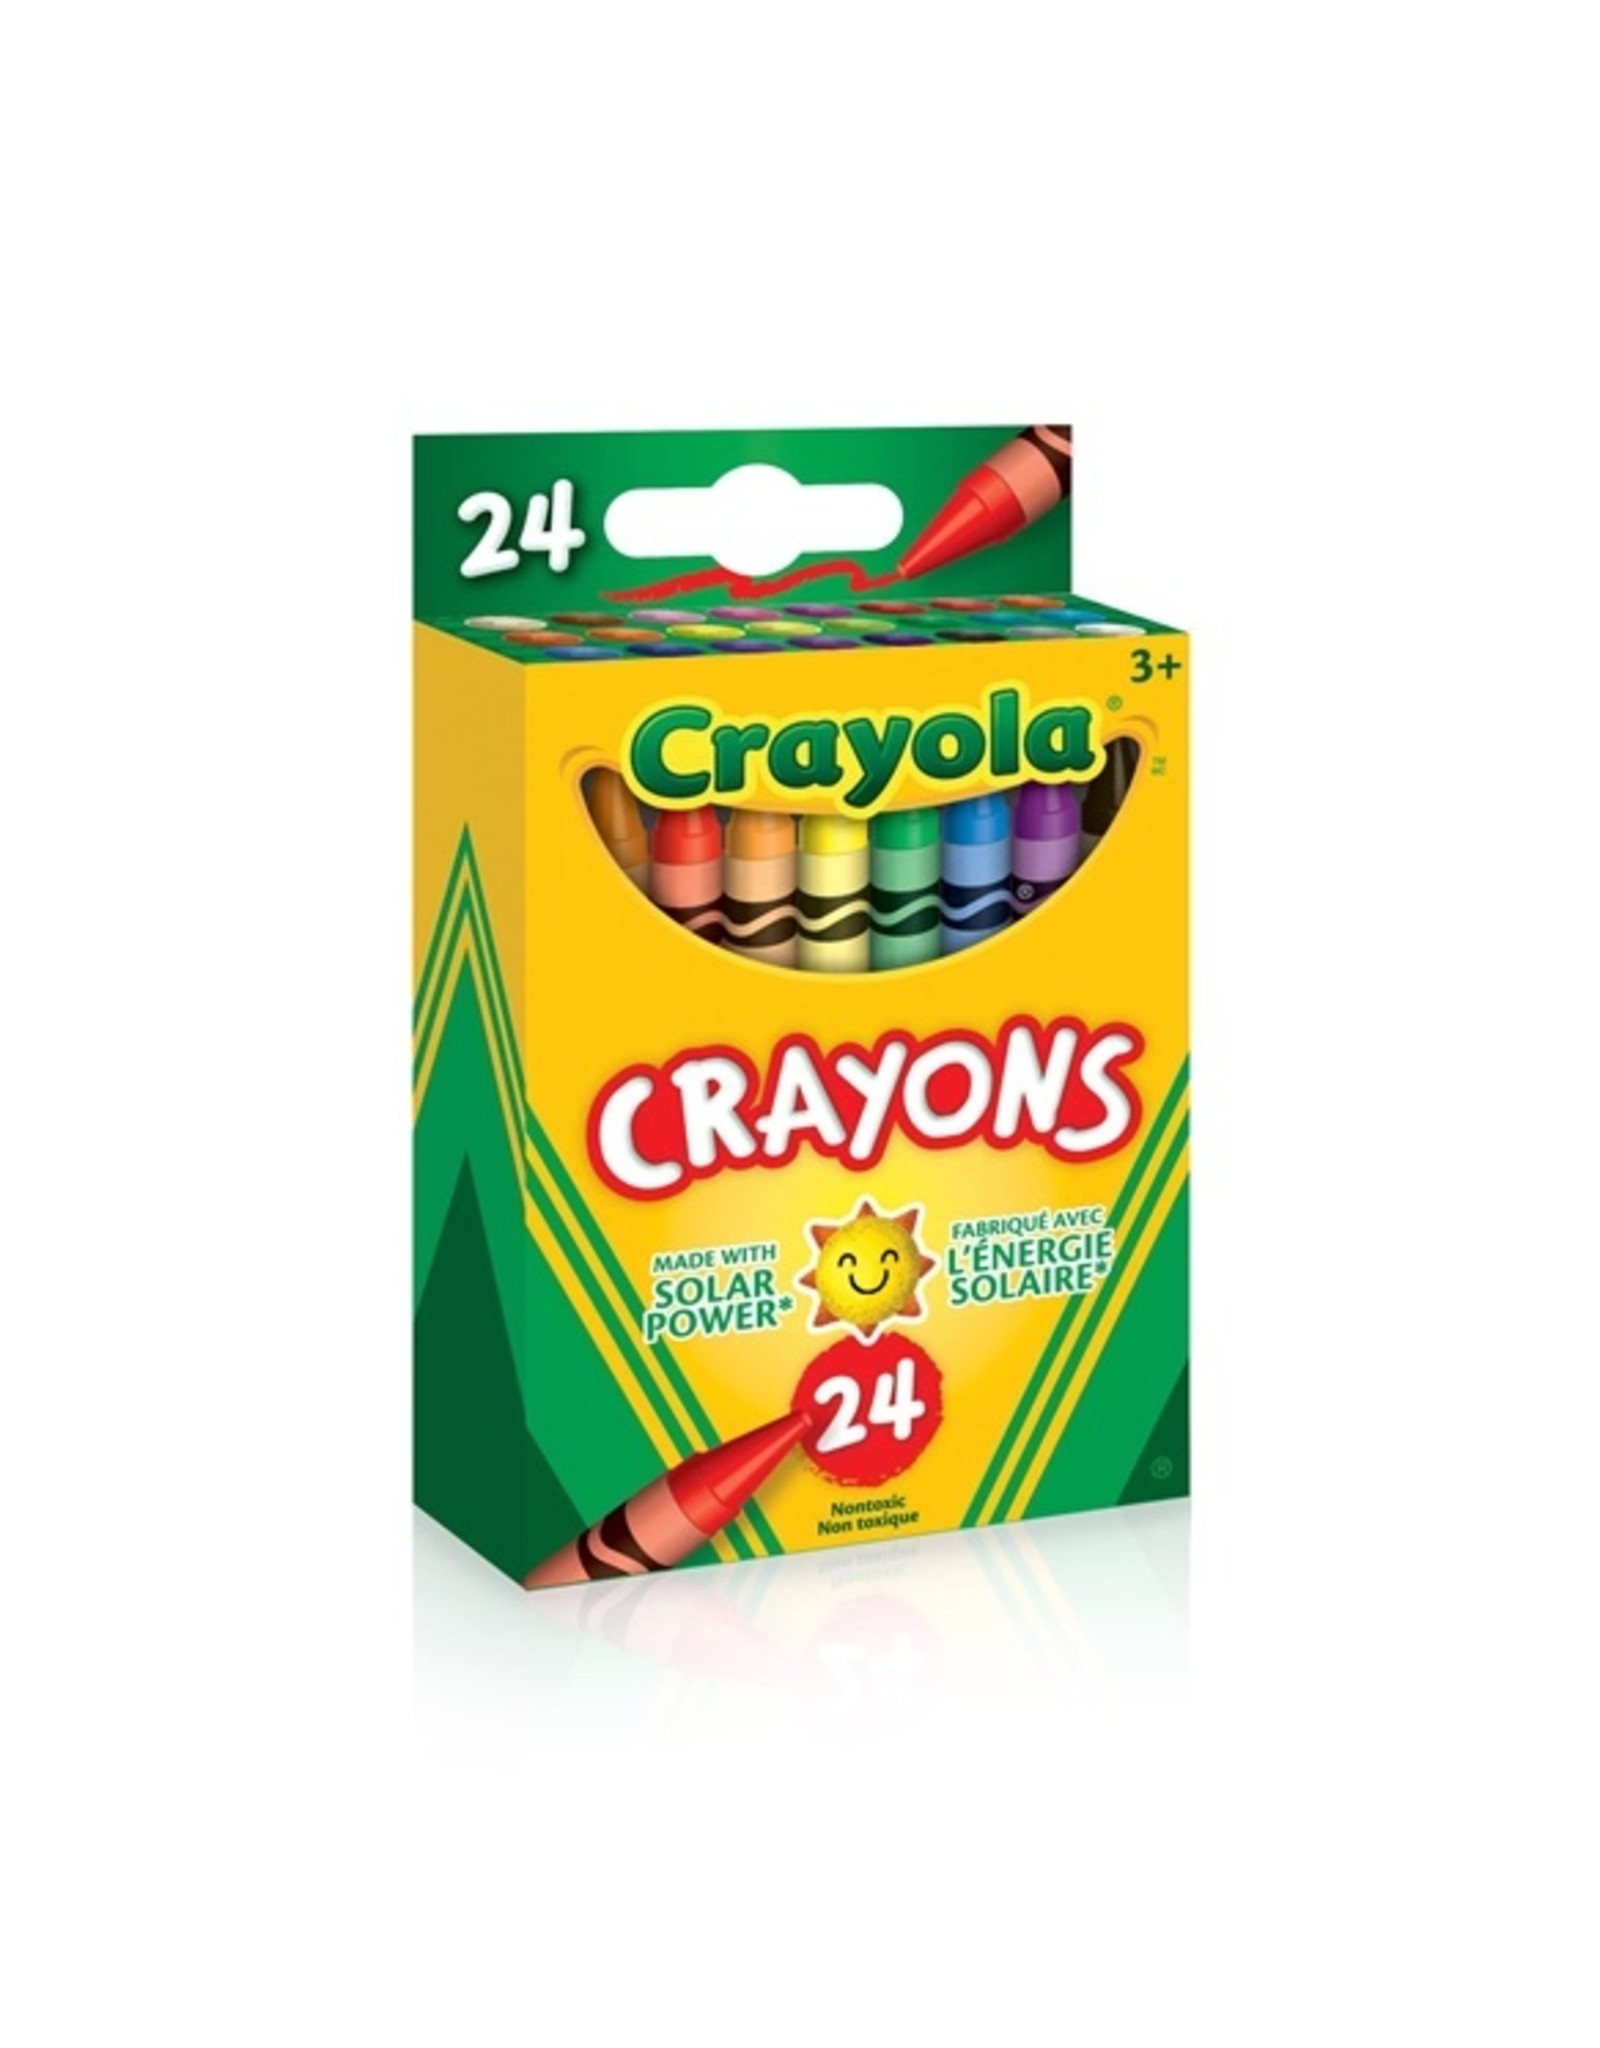 Crayola Crayons, 24 CT - regular